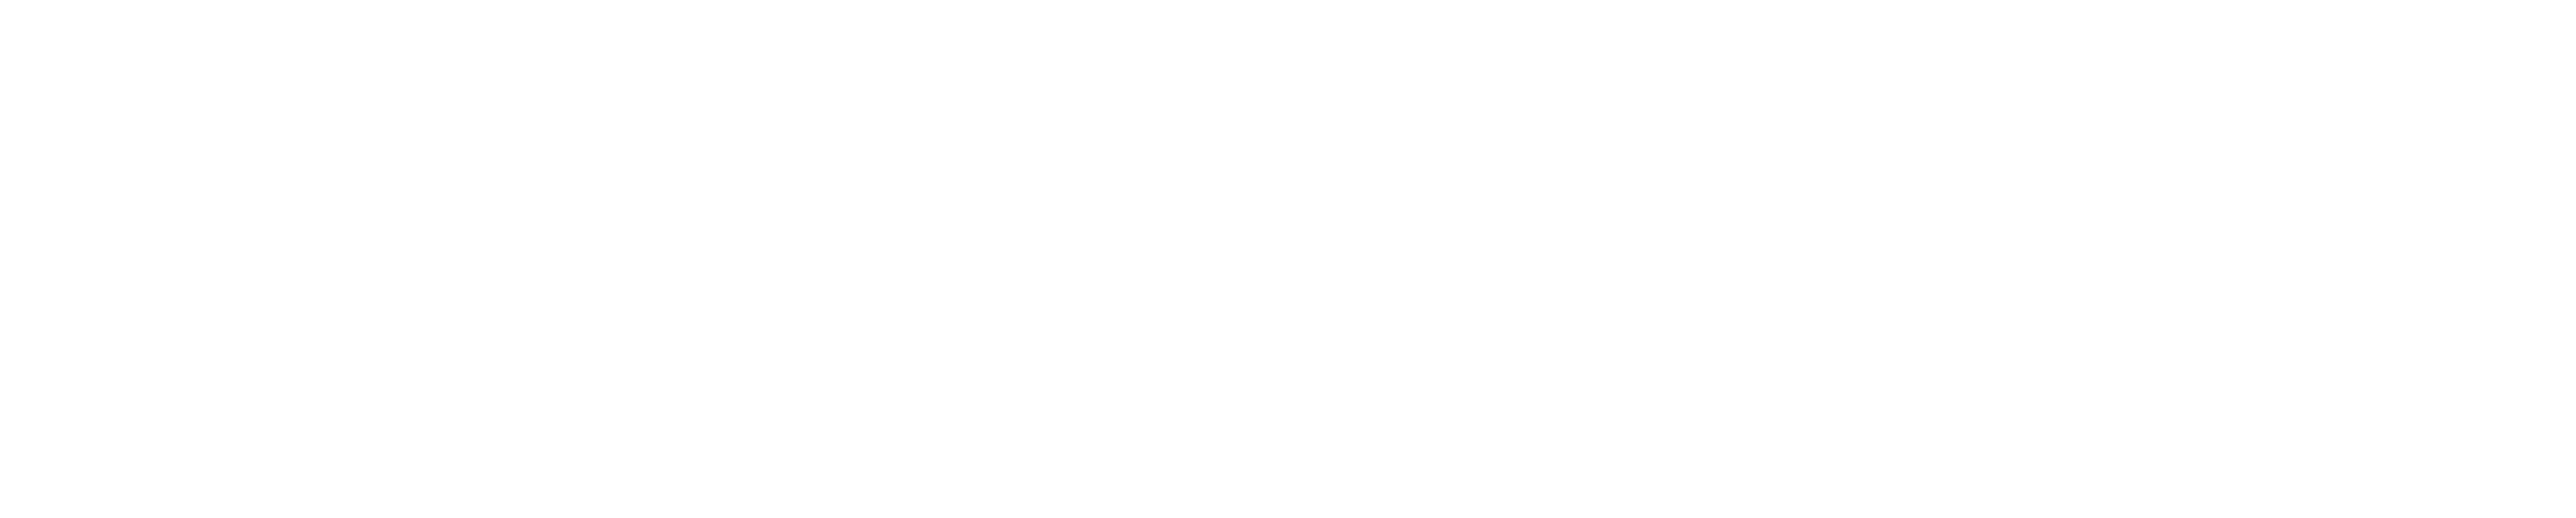 Логотип Selectel